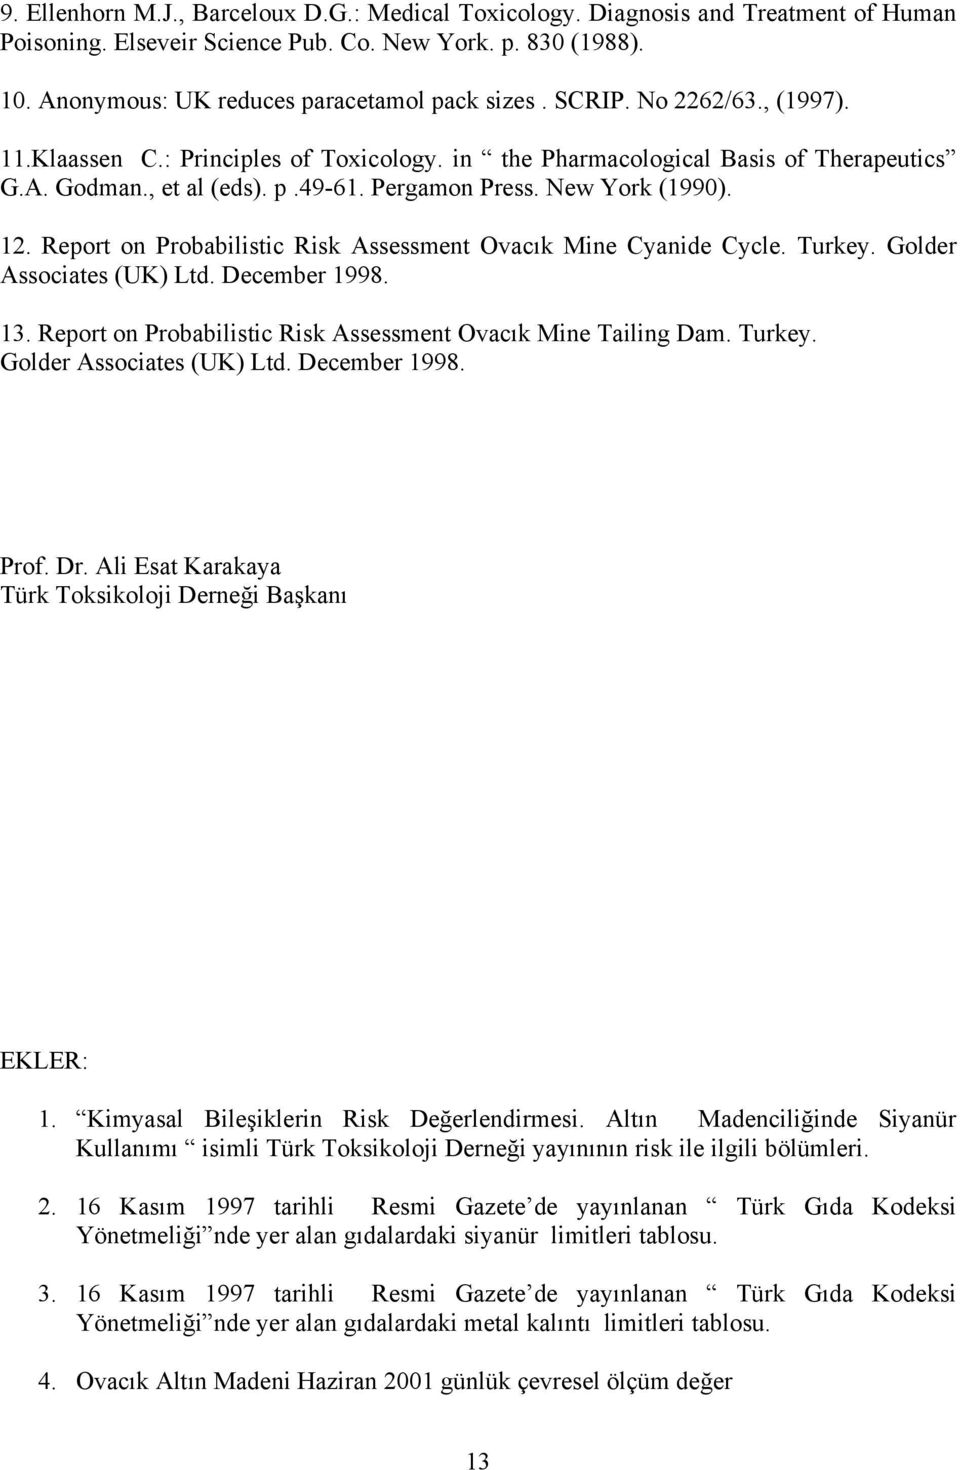 Report on Probabilistic Risk Assessment Ovacık Mine Cyanide Cycle. Turkey. Golder Associates (UK) Ltd. December 1998. 13. Report on Probabilistic Risk Assessment Ovacık Mine Tailing Dam. Turkey. Golder Associates (UK) Ltd. December 1998. Prof.